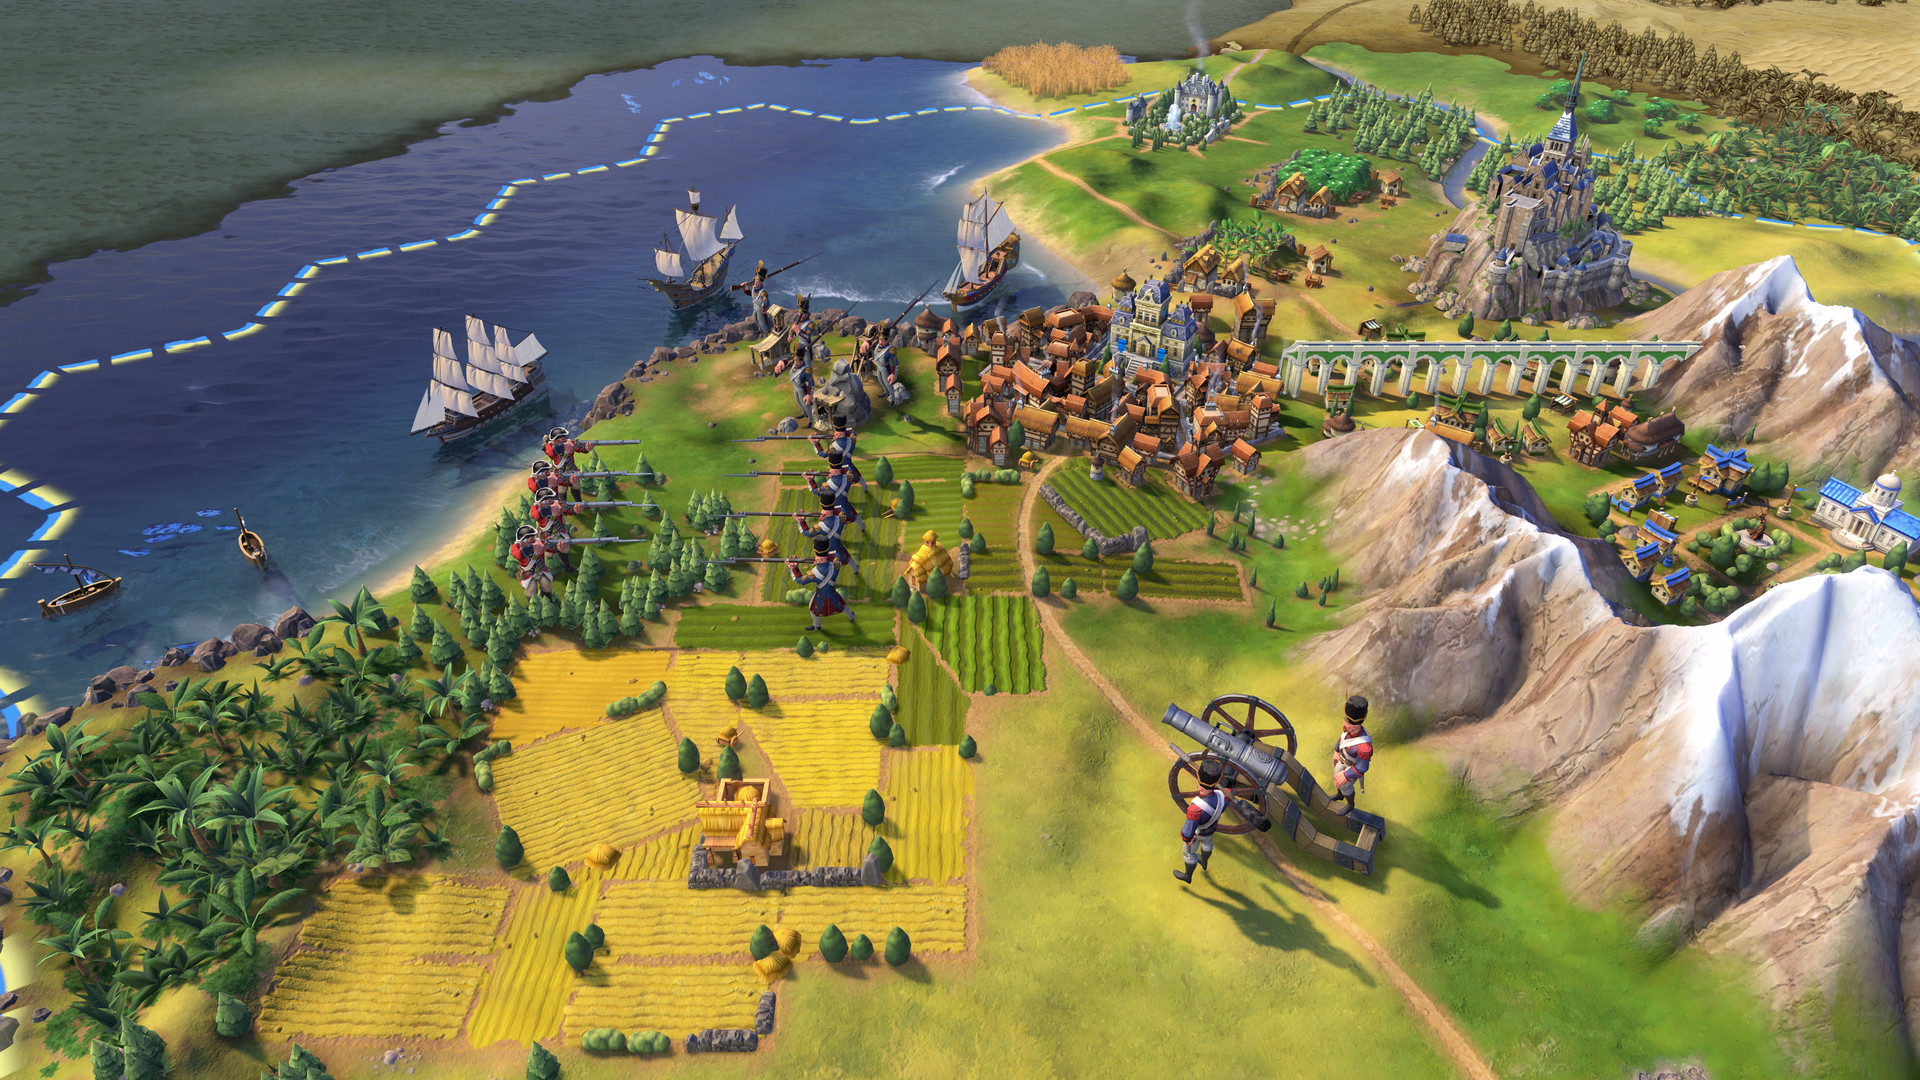 Sid Meier S Civilization Vi On Steam